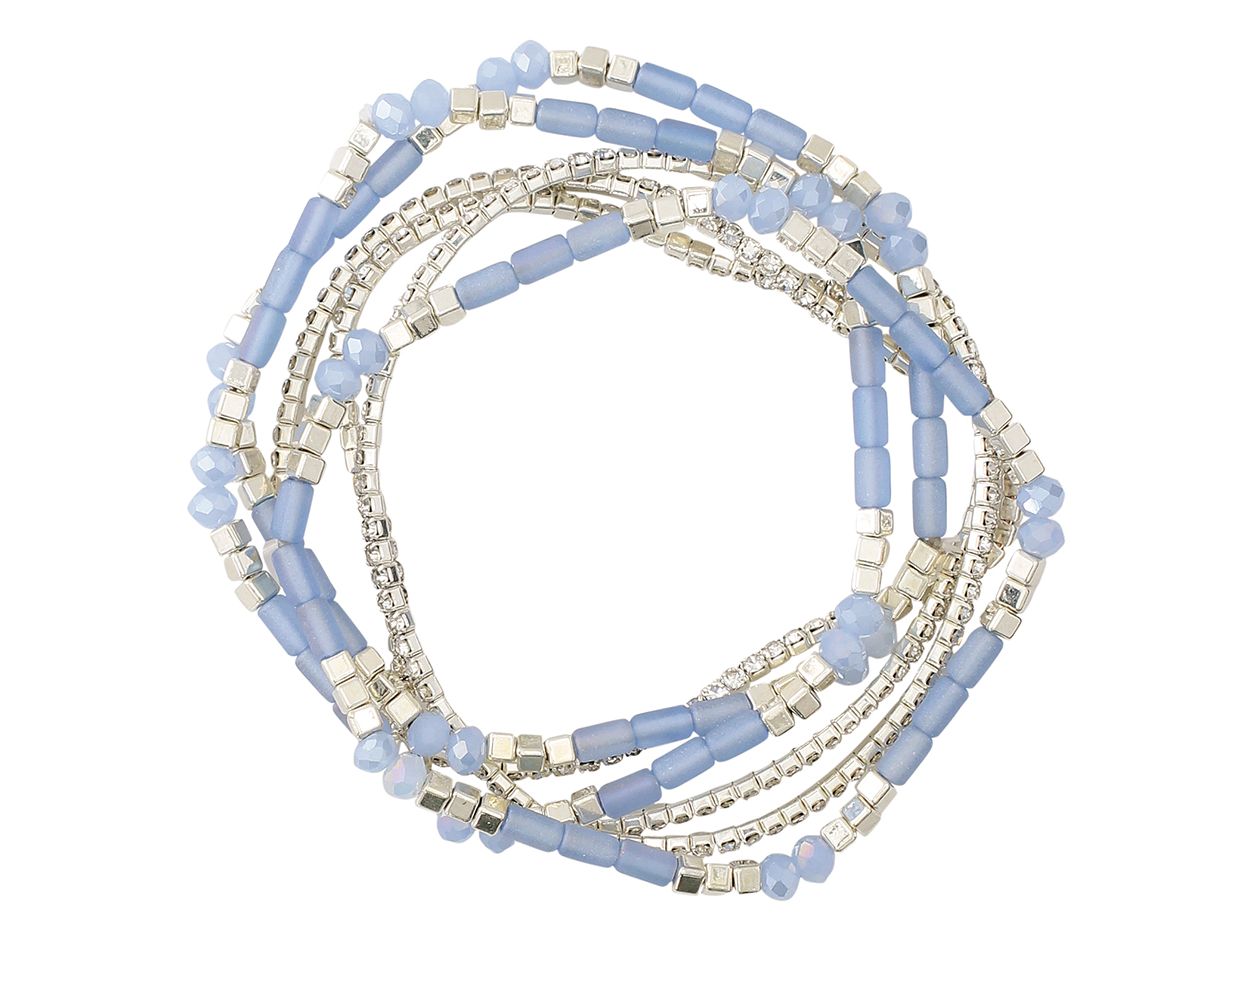 Periwinkle Blue Beaded 6 Strand Bracelet